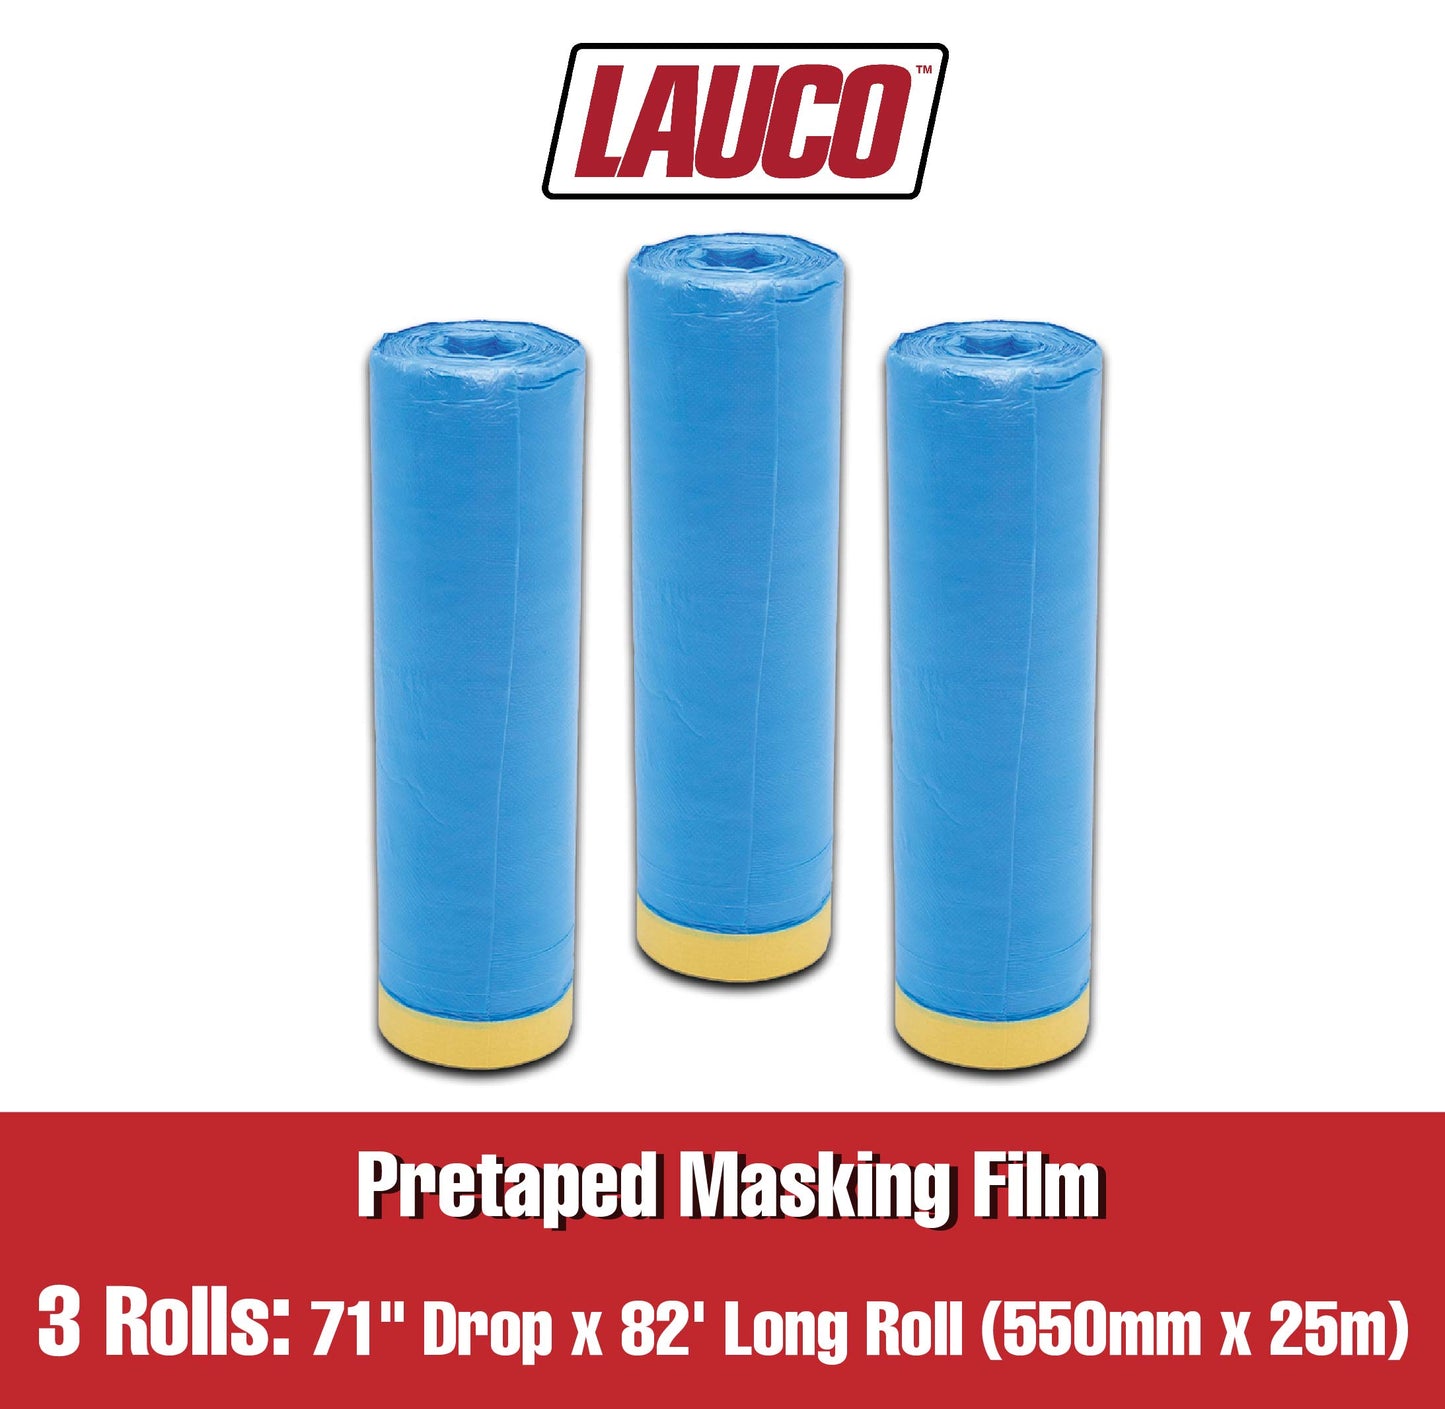 Blue Pretaped Masking Film/Pre-Folded Plastic Protective Sheeting Automotive, Plastic Paint Tape and Drape (3 PACK)